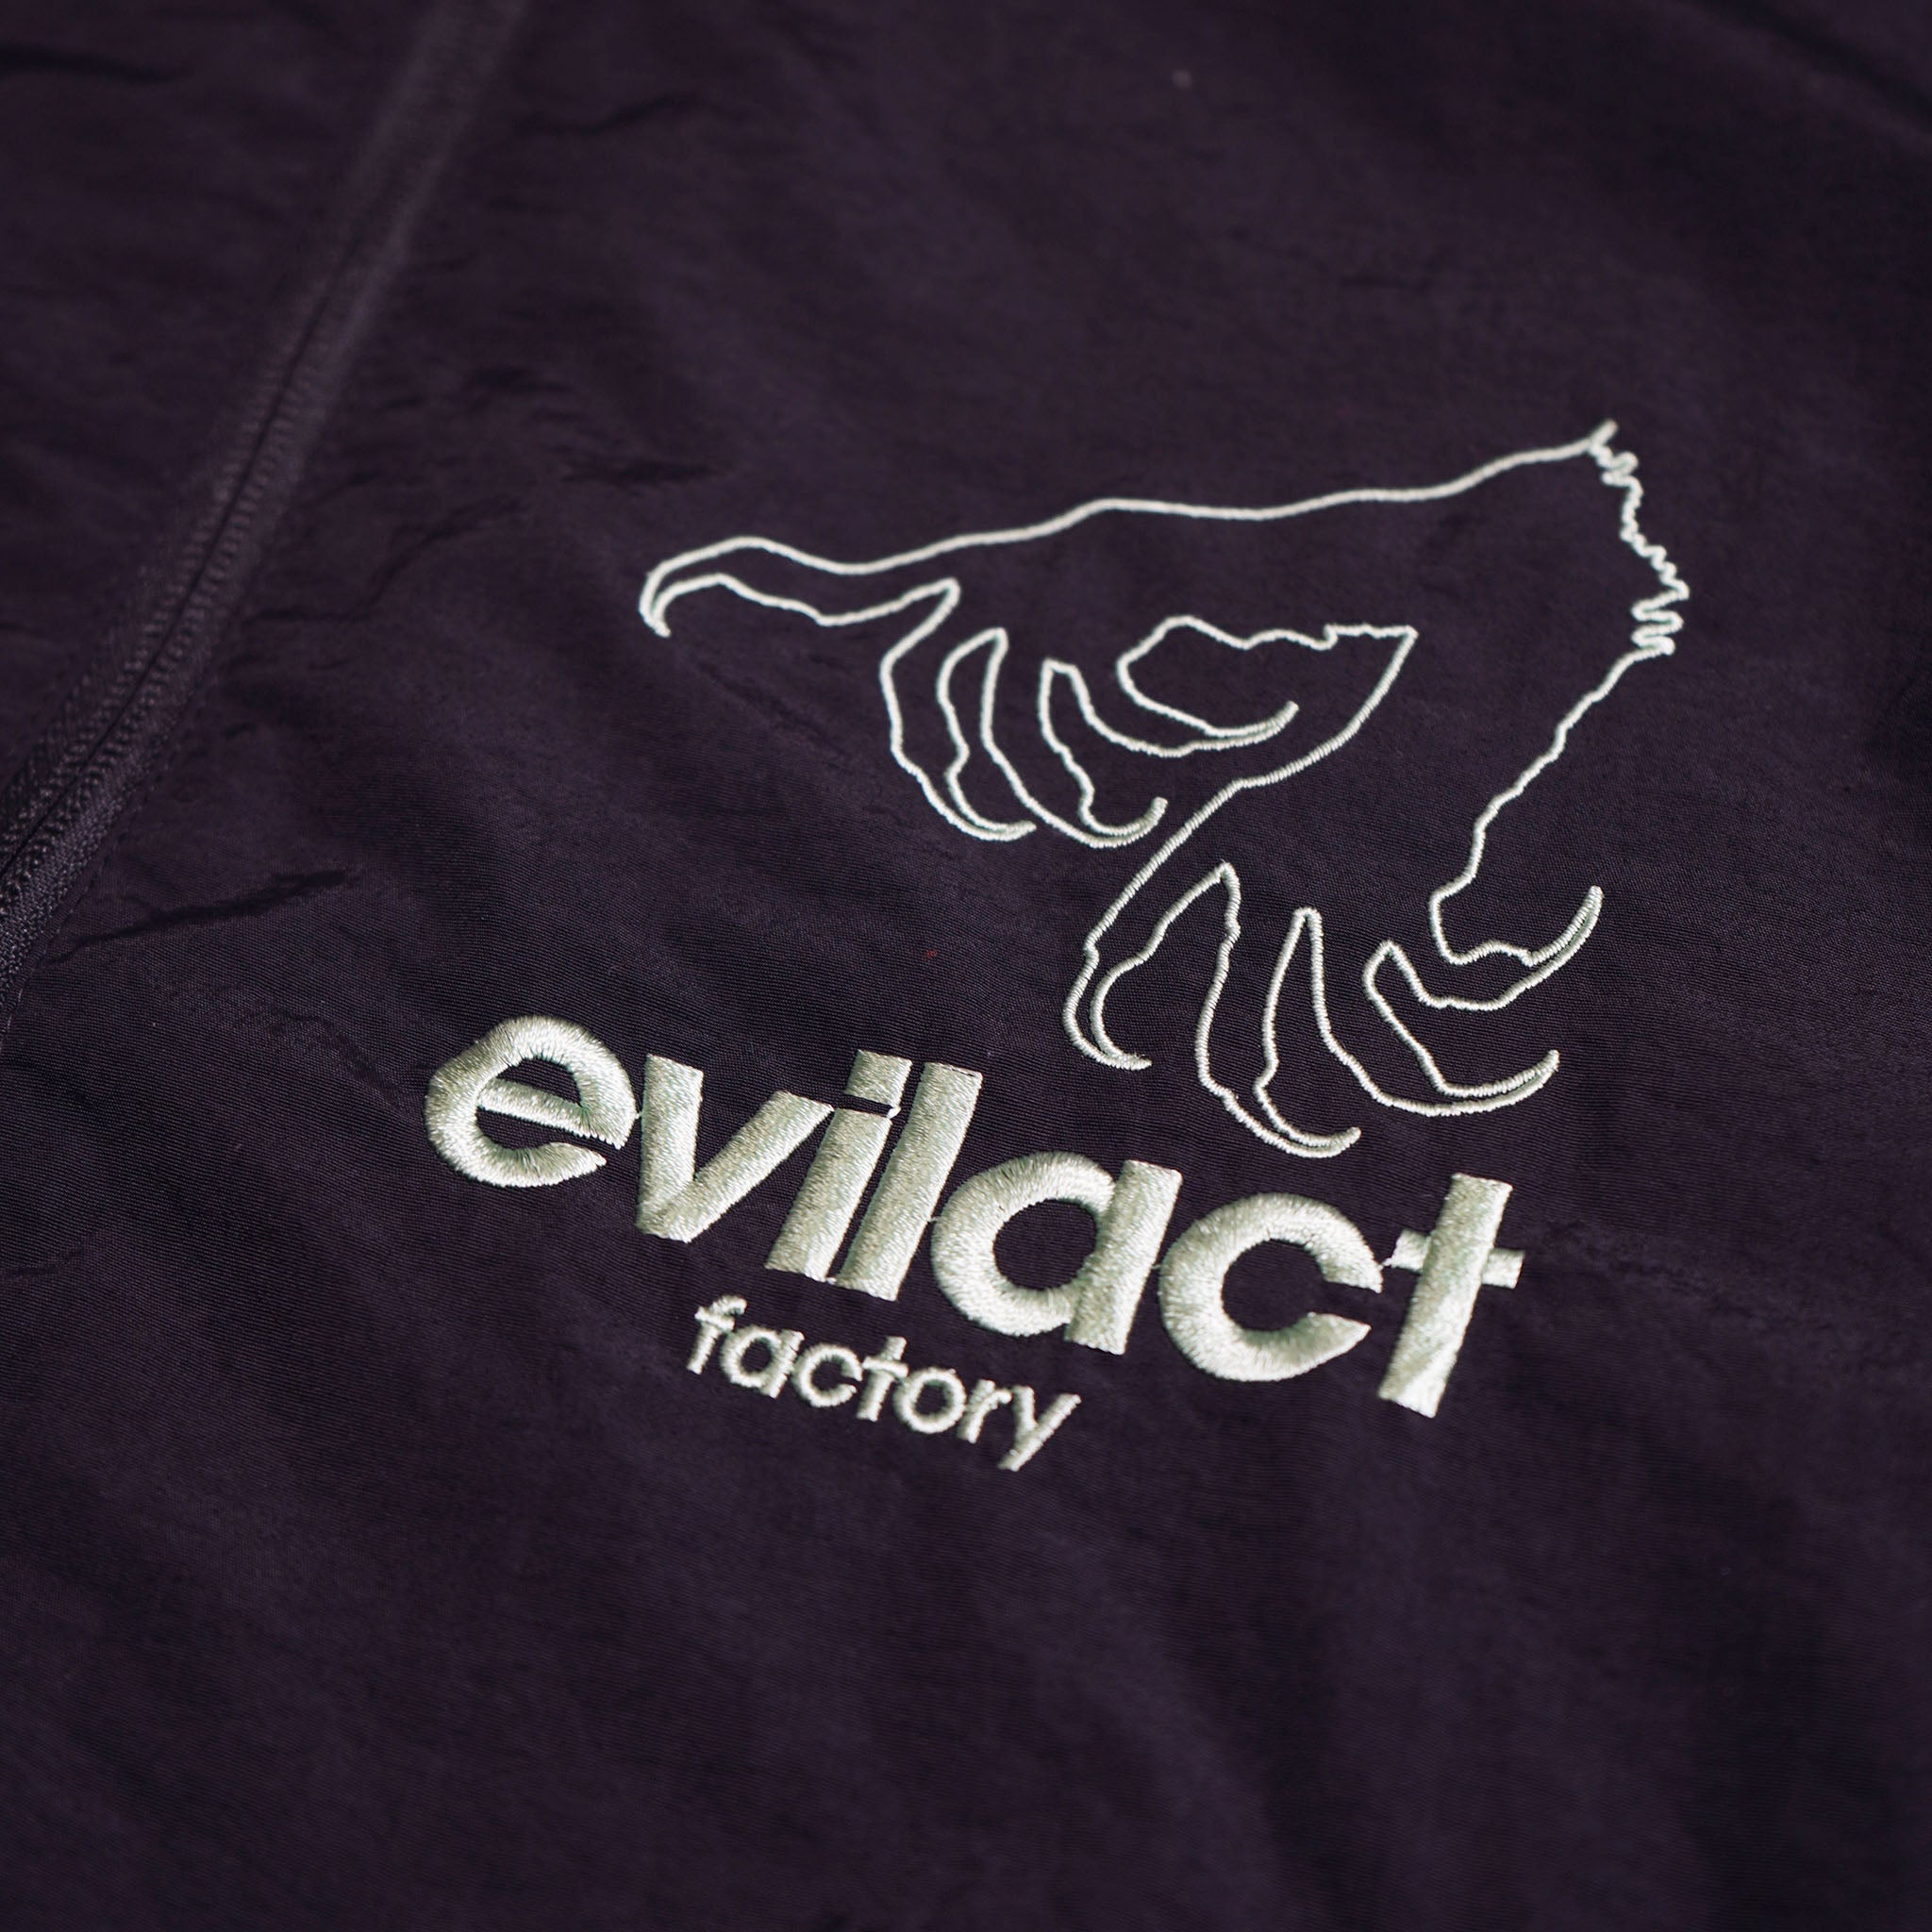 EVILACT Factory Nylon Training Jacket | EVILACT (イーブルアクト